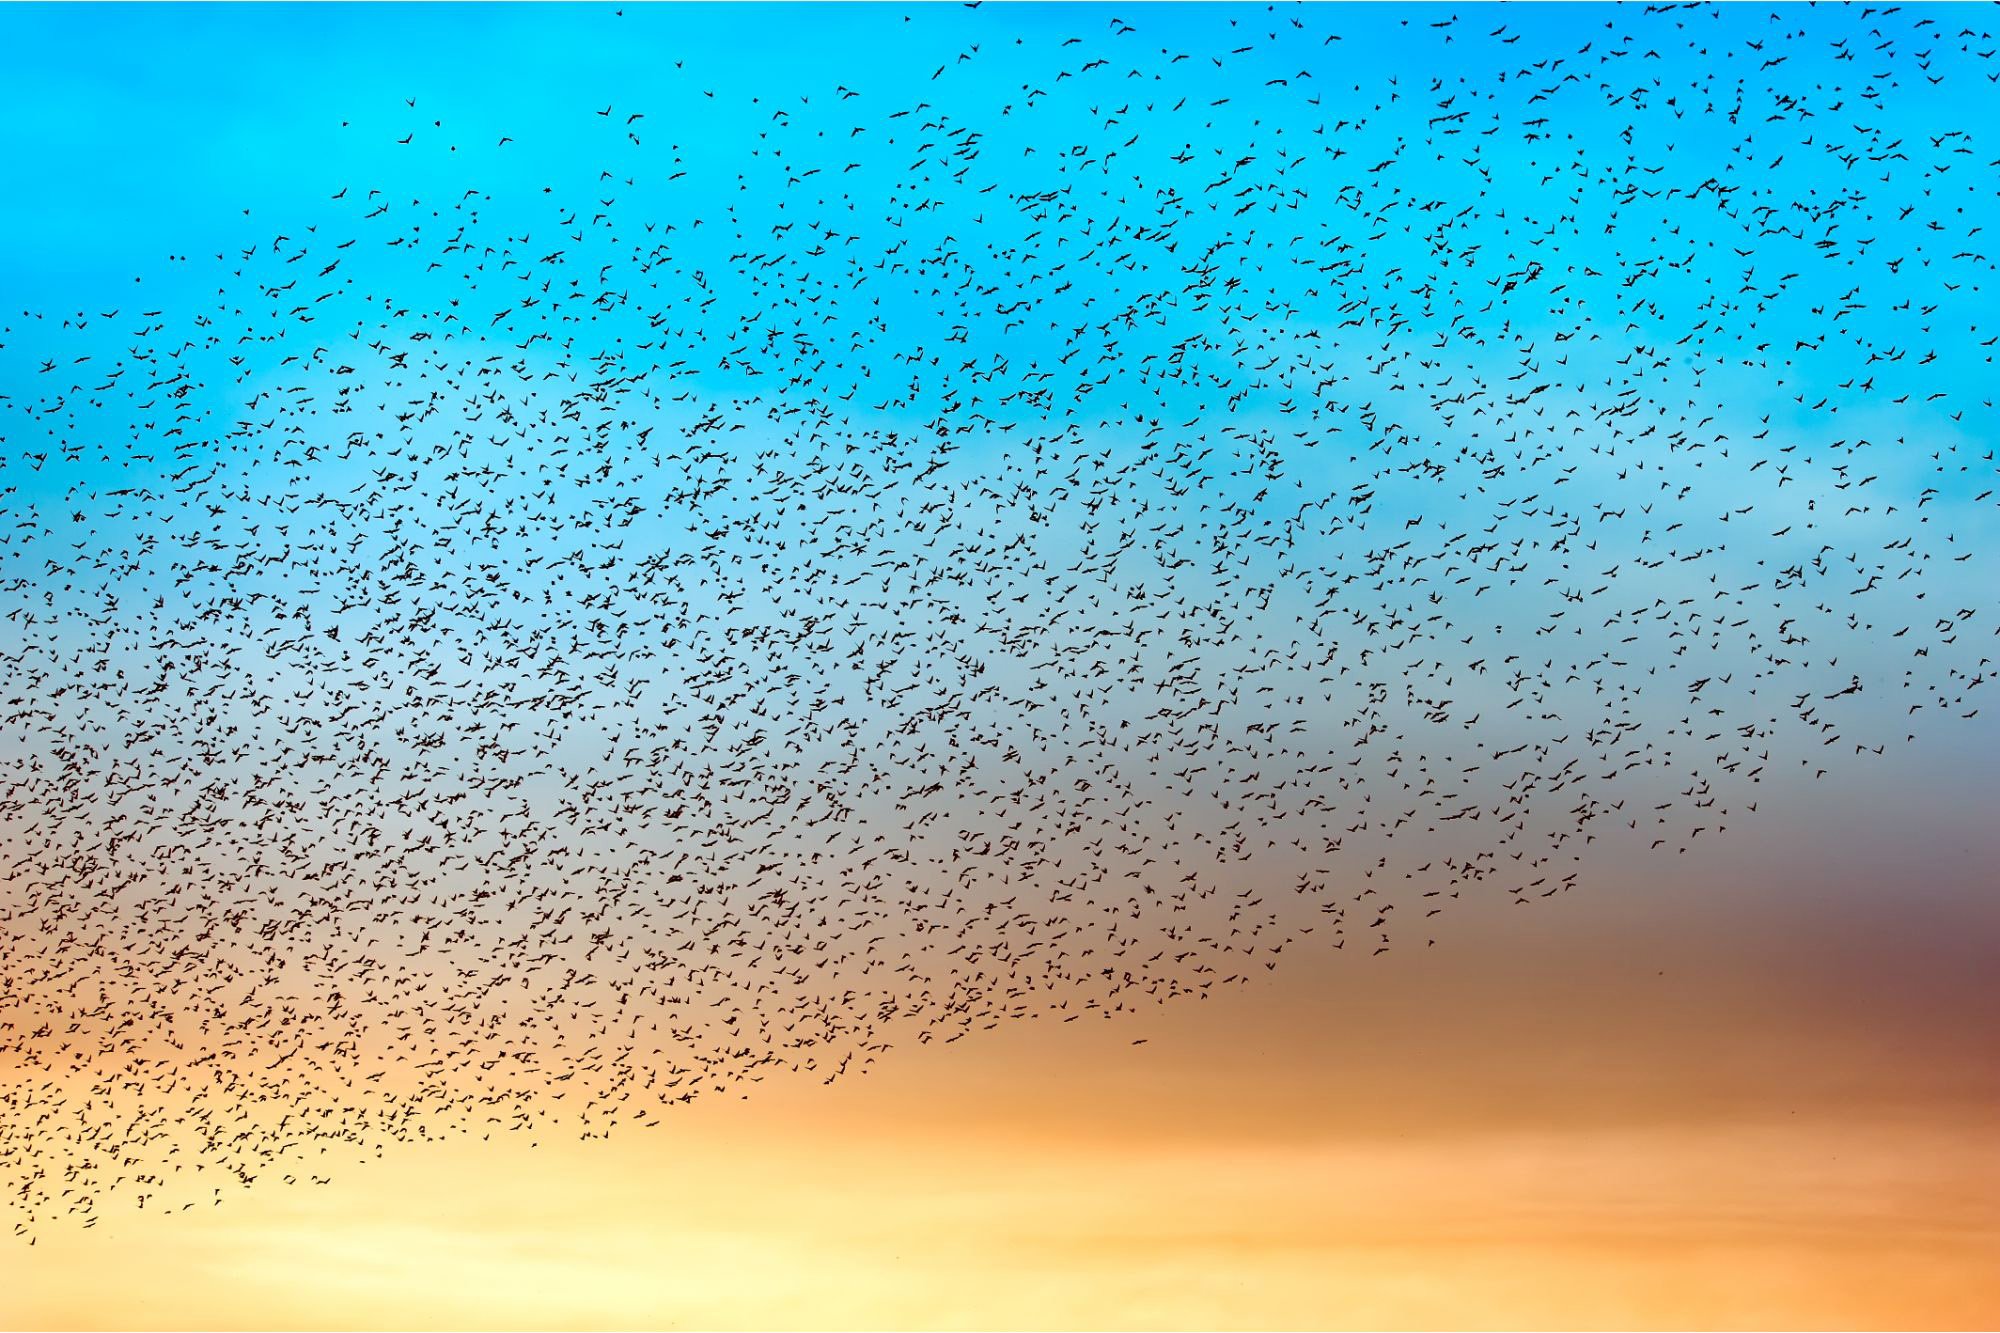 How Do Birds Flock? Researchers Reveal Previously Unknown Aerodynamic Phenomenon [Video]